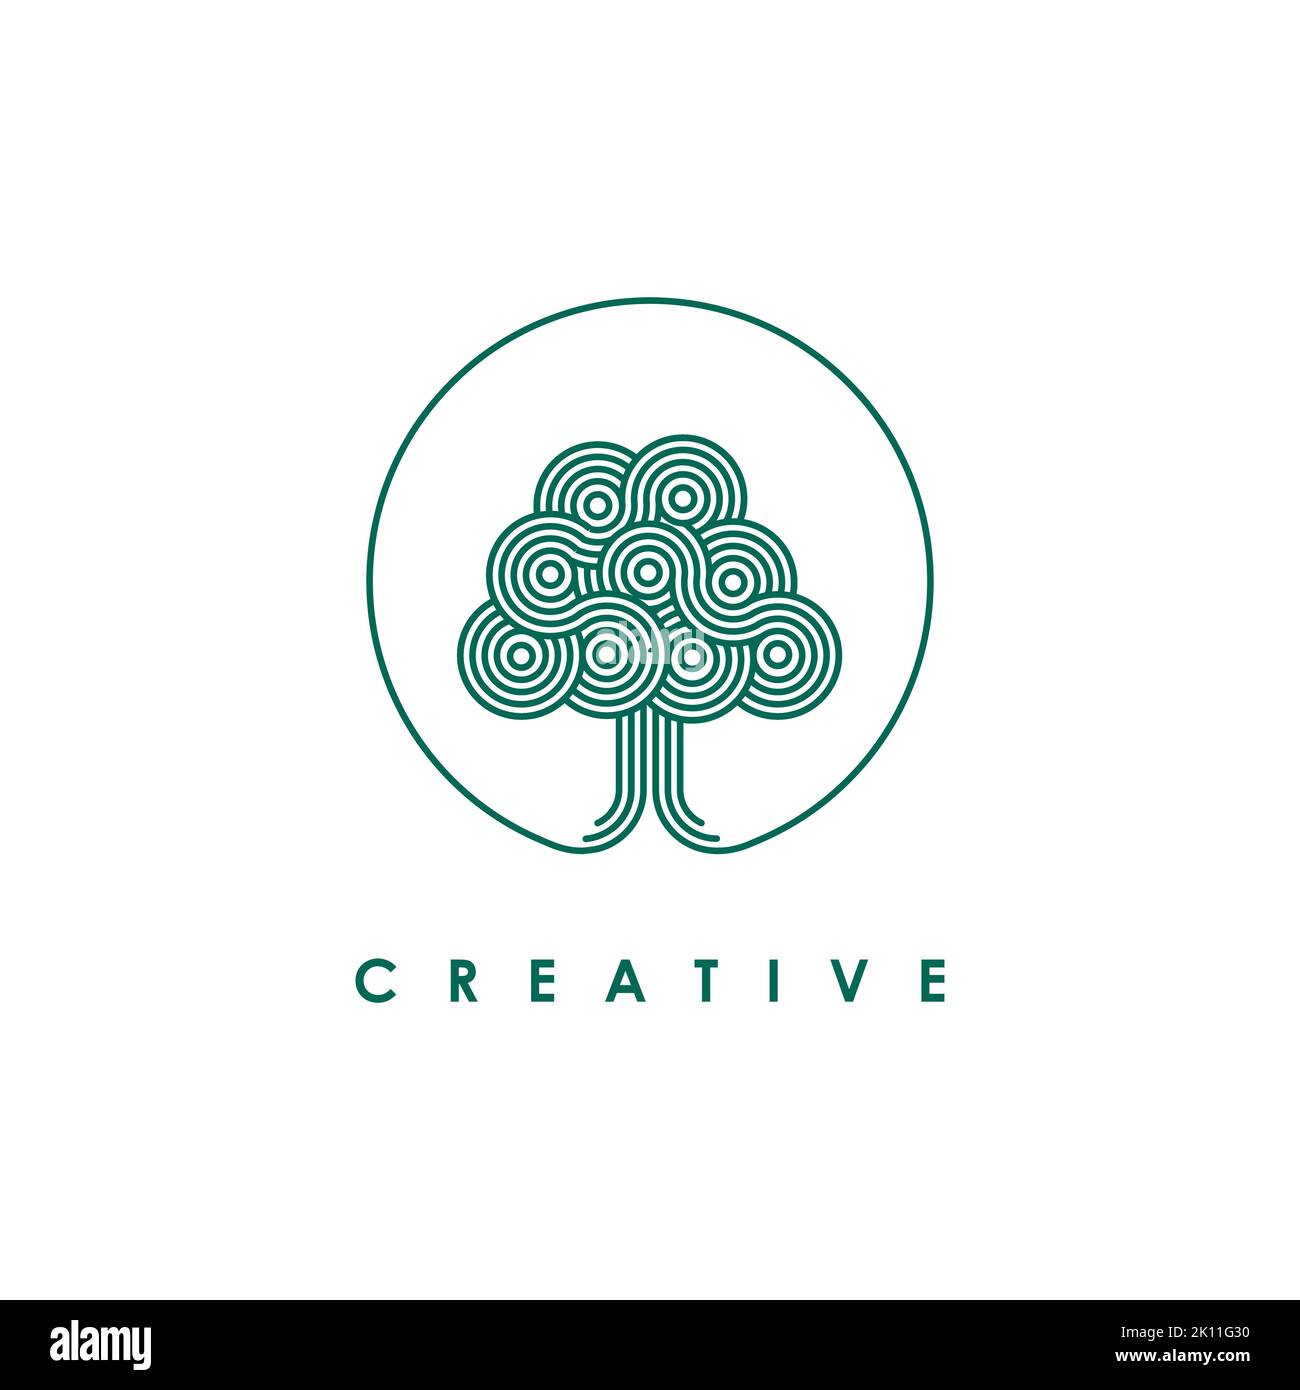 Abstrakte Baum Logo Design Vektor Vorlage. Kreative lineare Baum Symbol Inspiration Stock Vektor